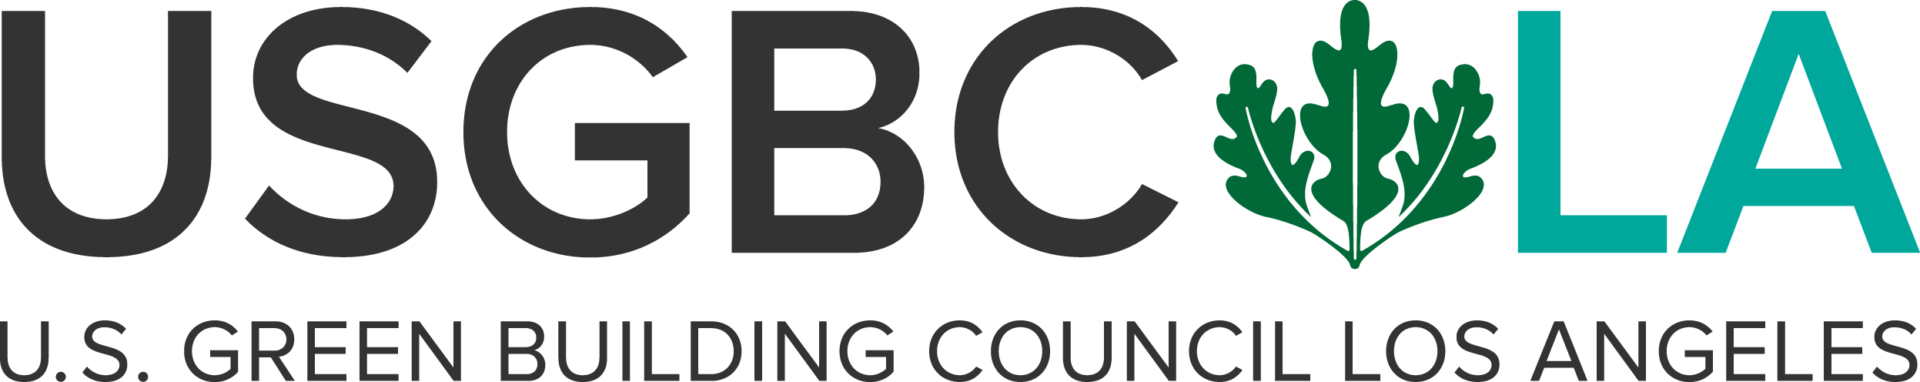 USGBC-LA_logo (1).png